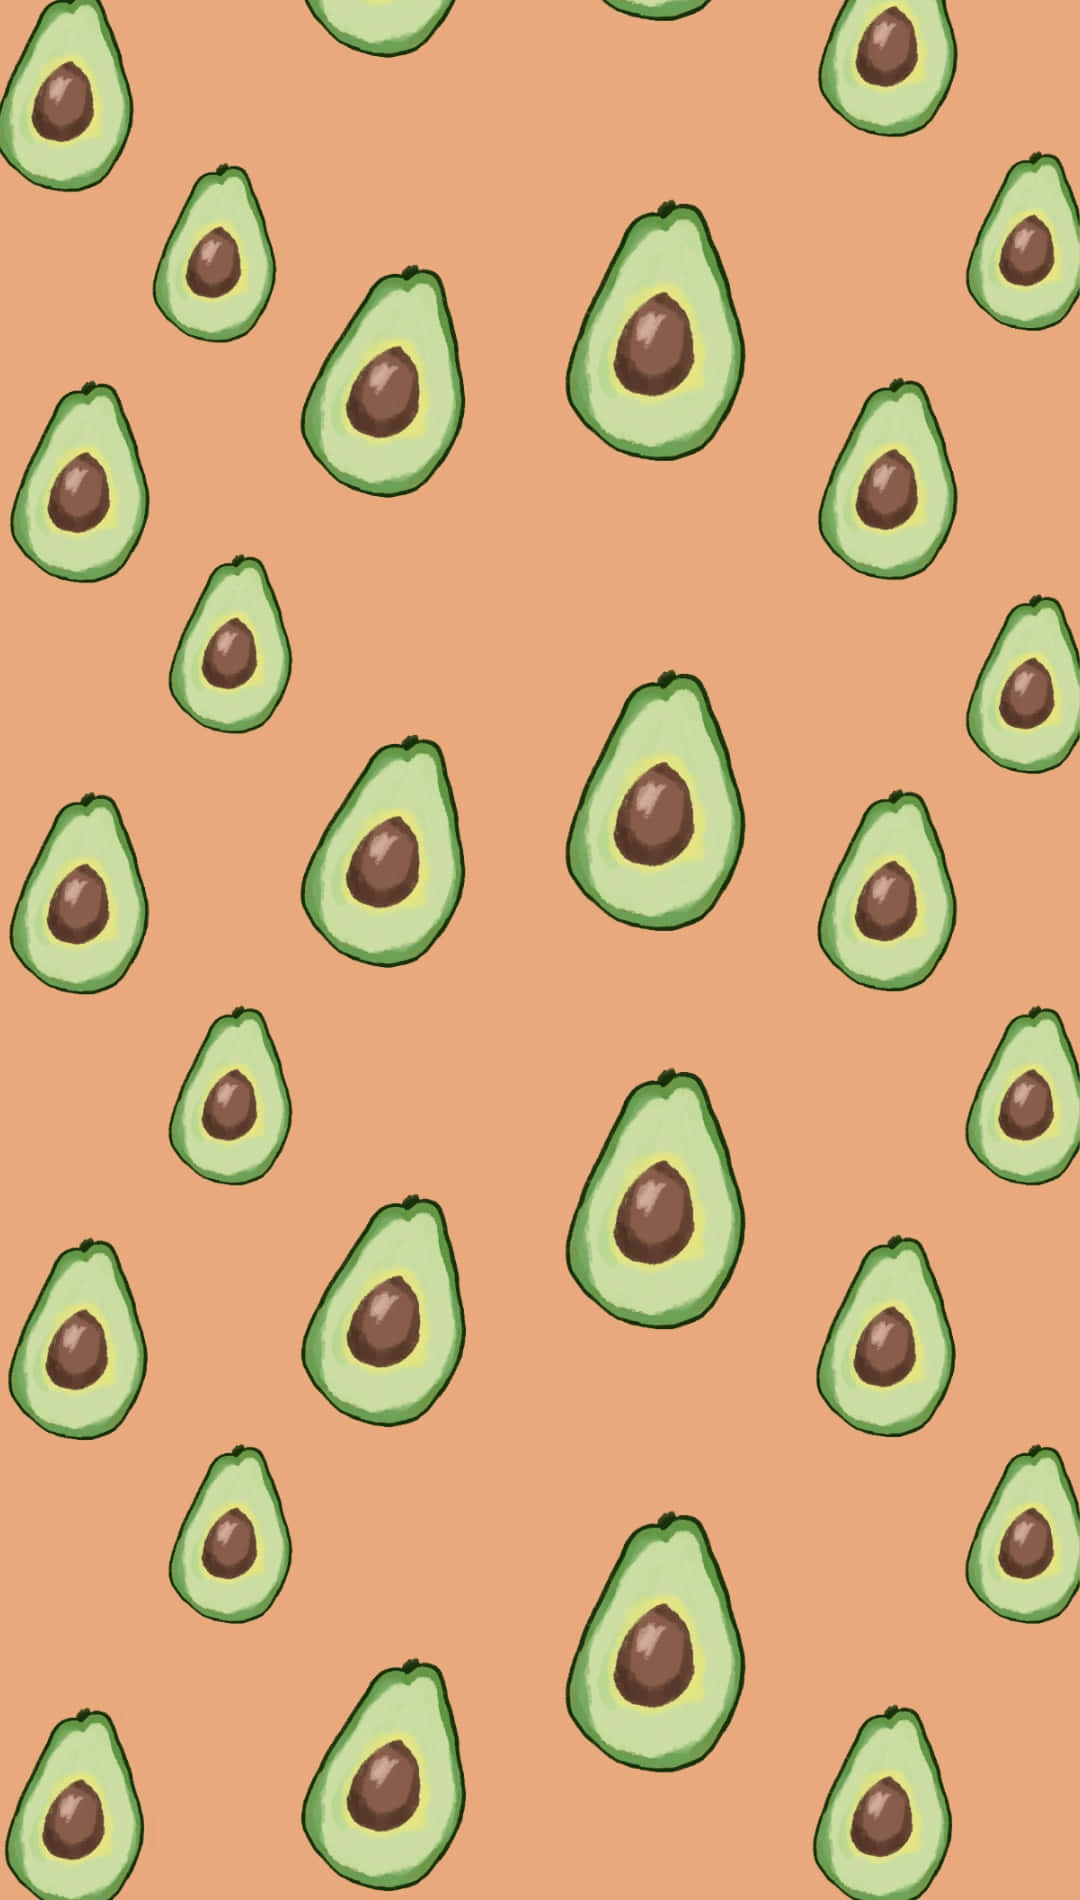 Cute Avocado Wallpaper for Phones